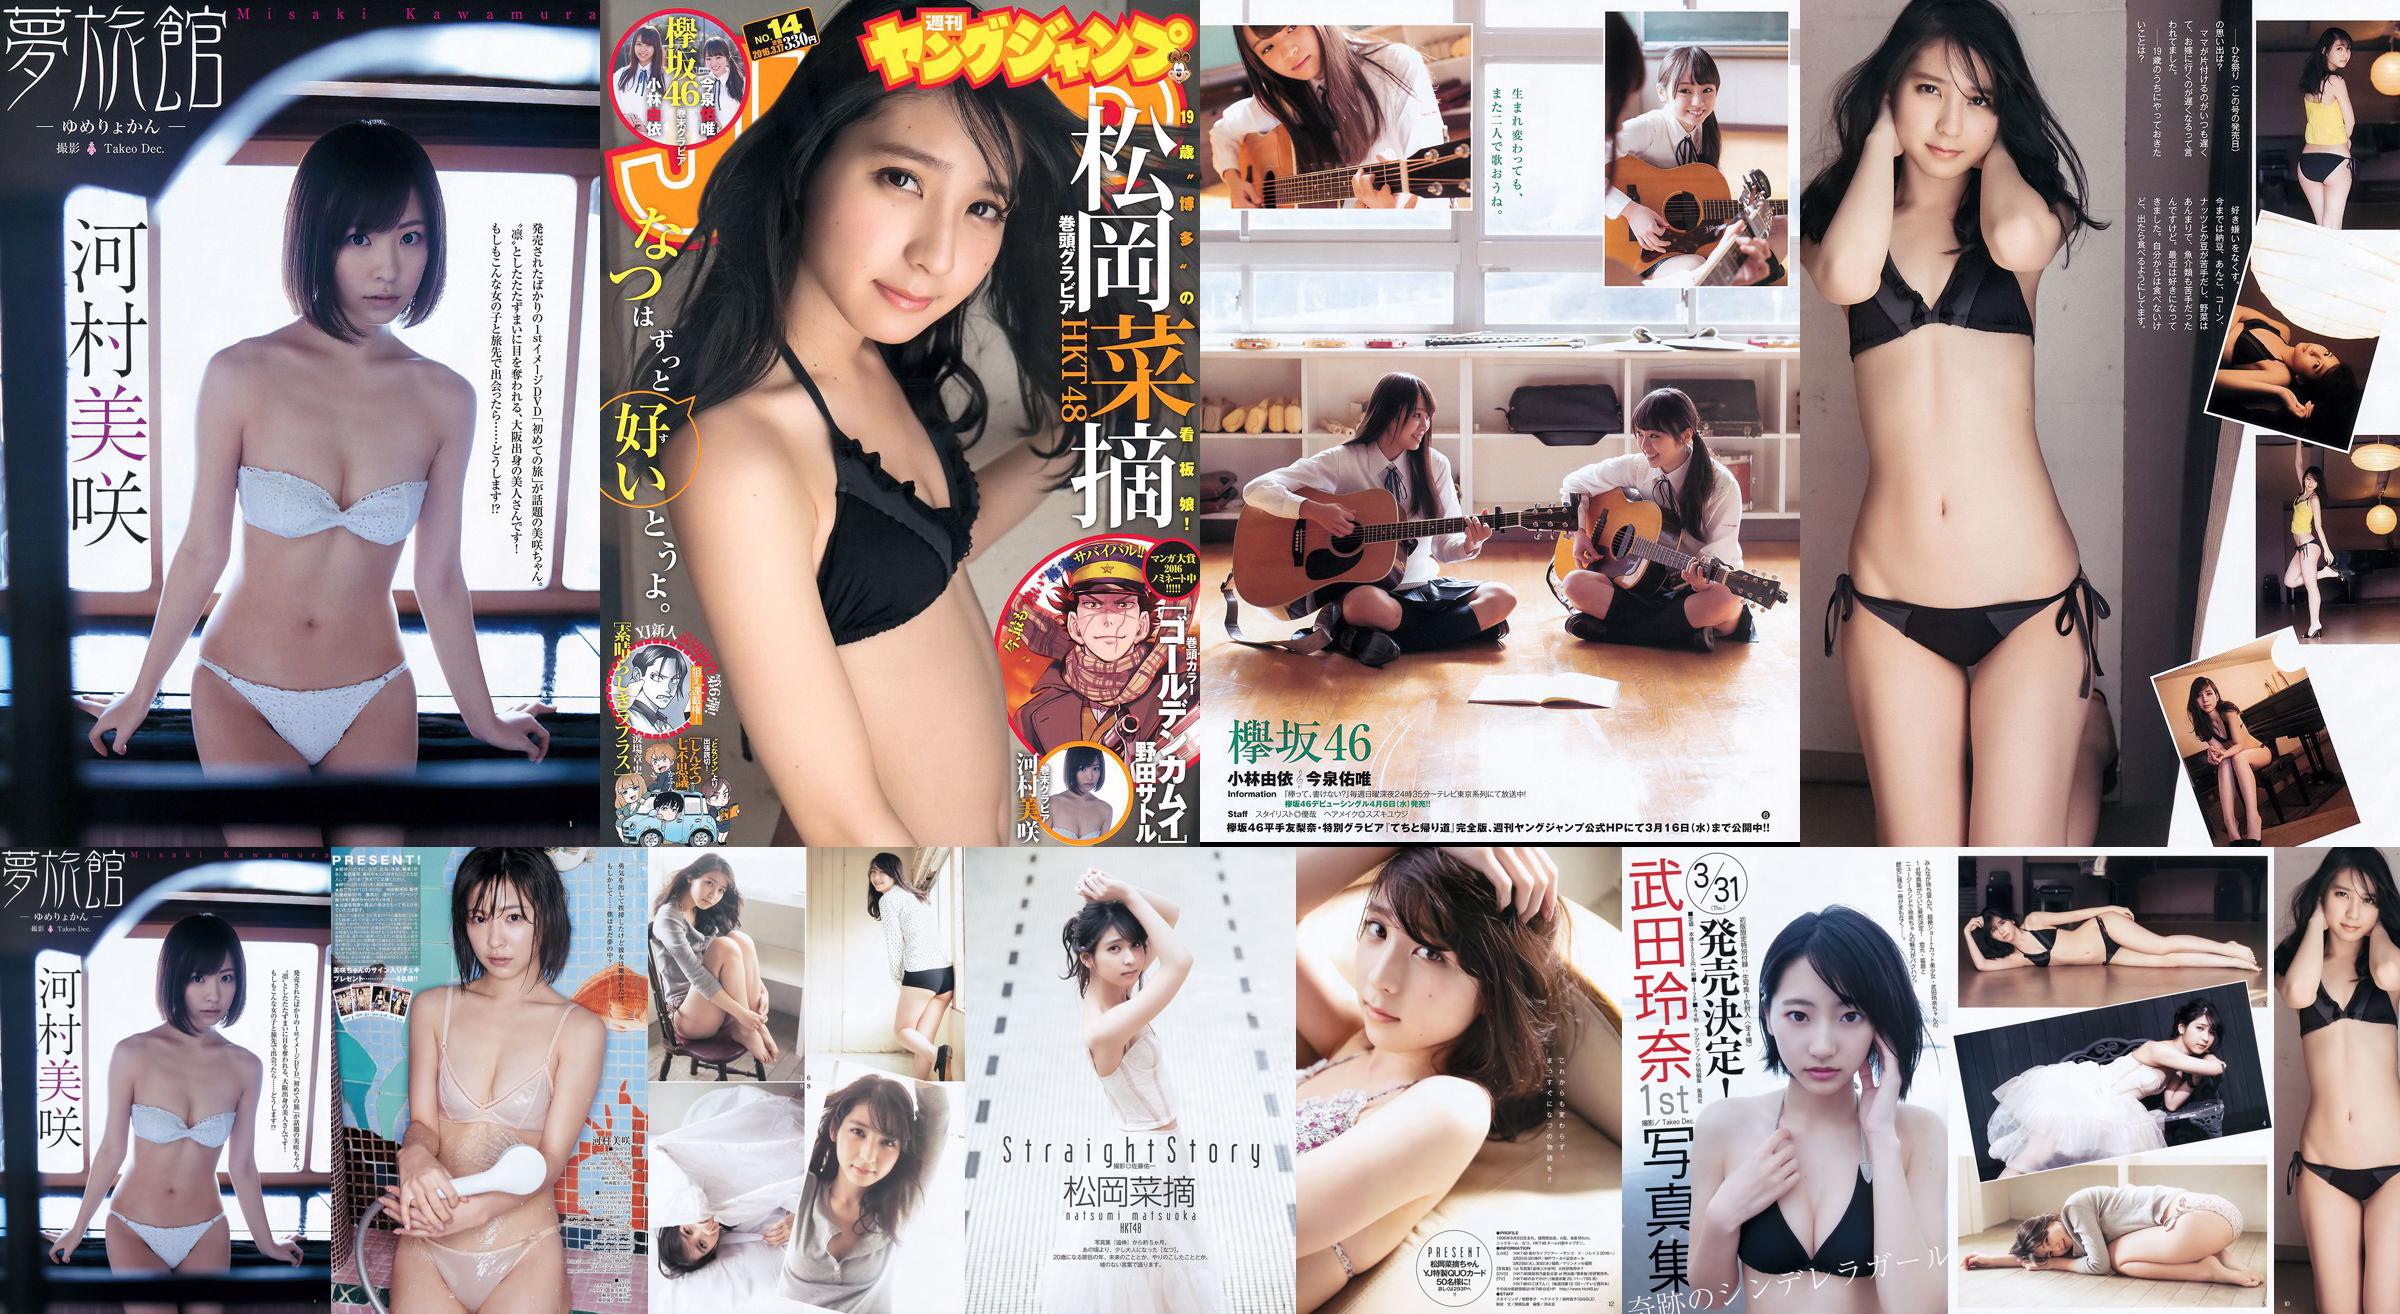 Choix de légumes Muraoka Yui Kobayashi Yui Imaizumi Misaki Kawamura [Weekly Young Jump] Magazine photo n ° 14 2016 No.f80eba Page 1